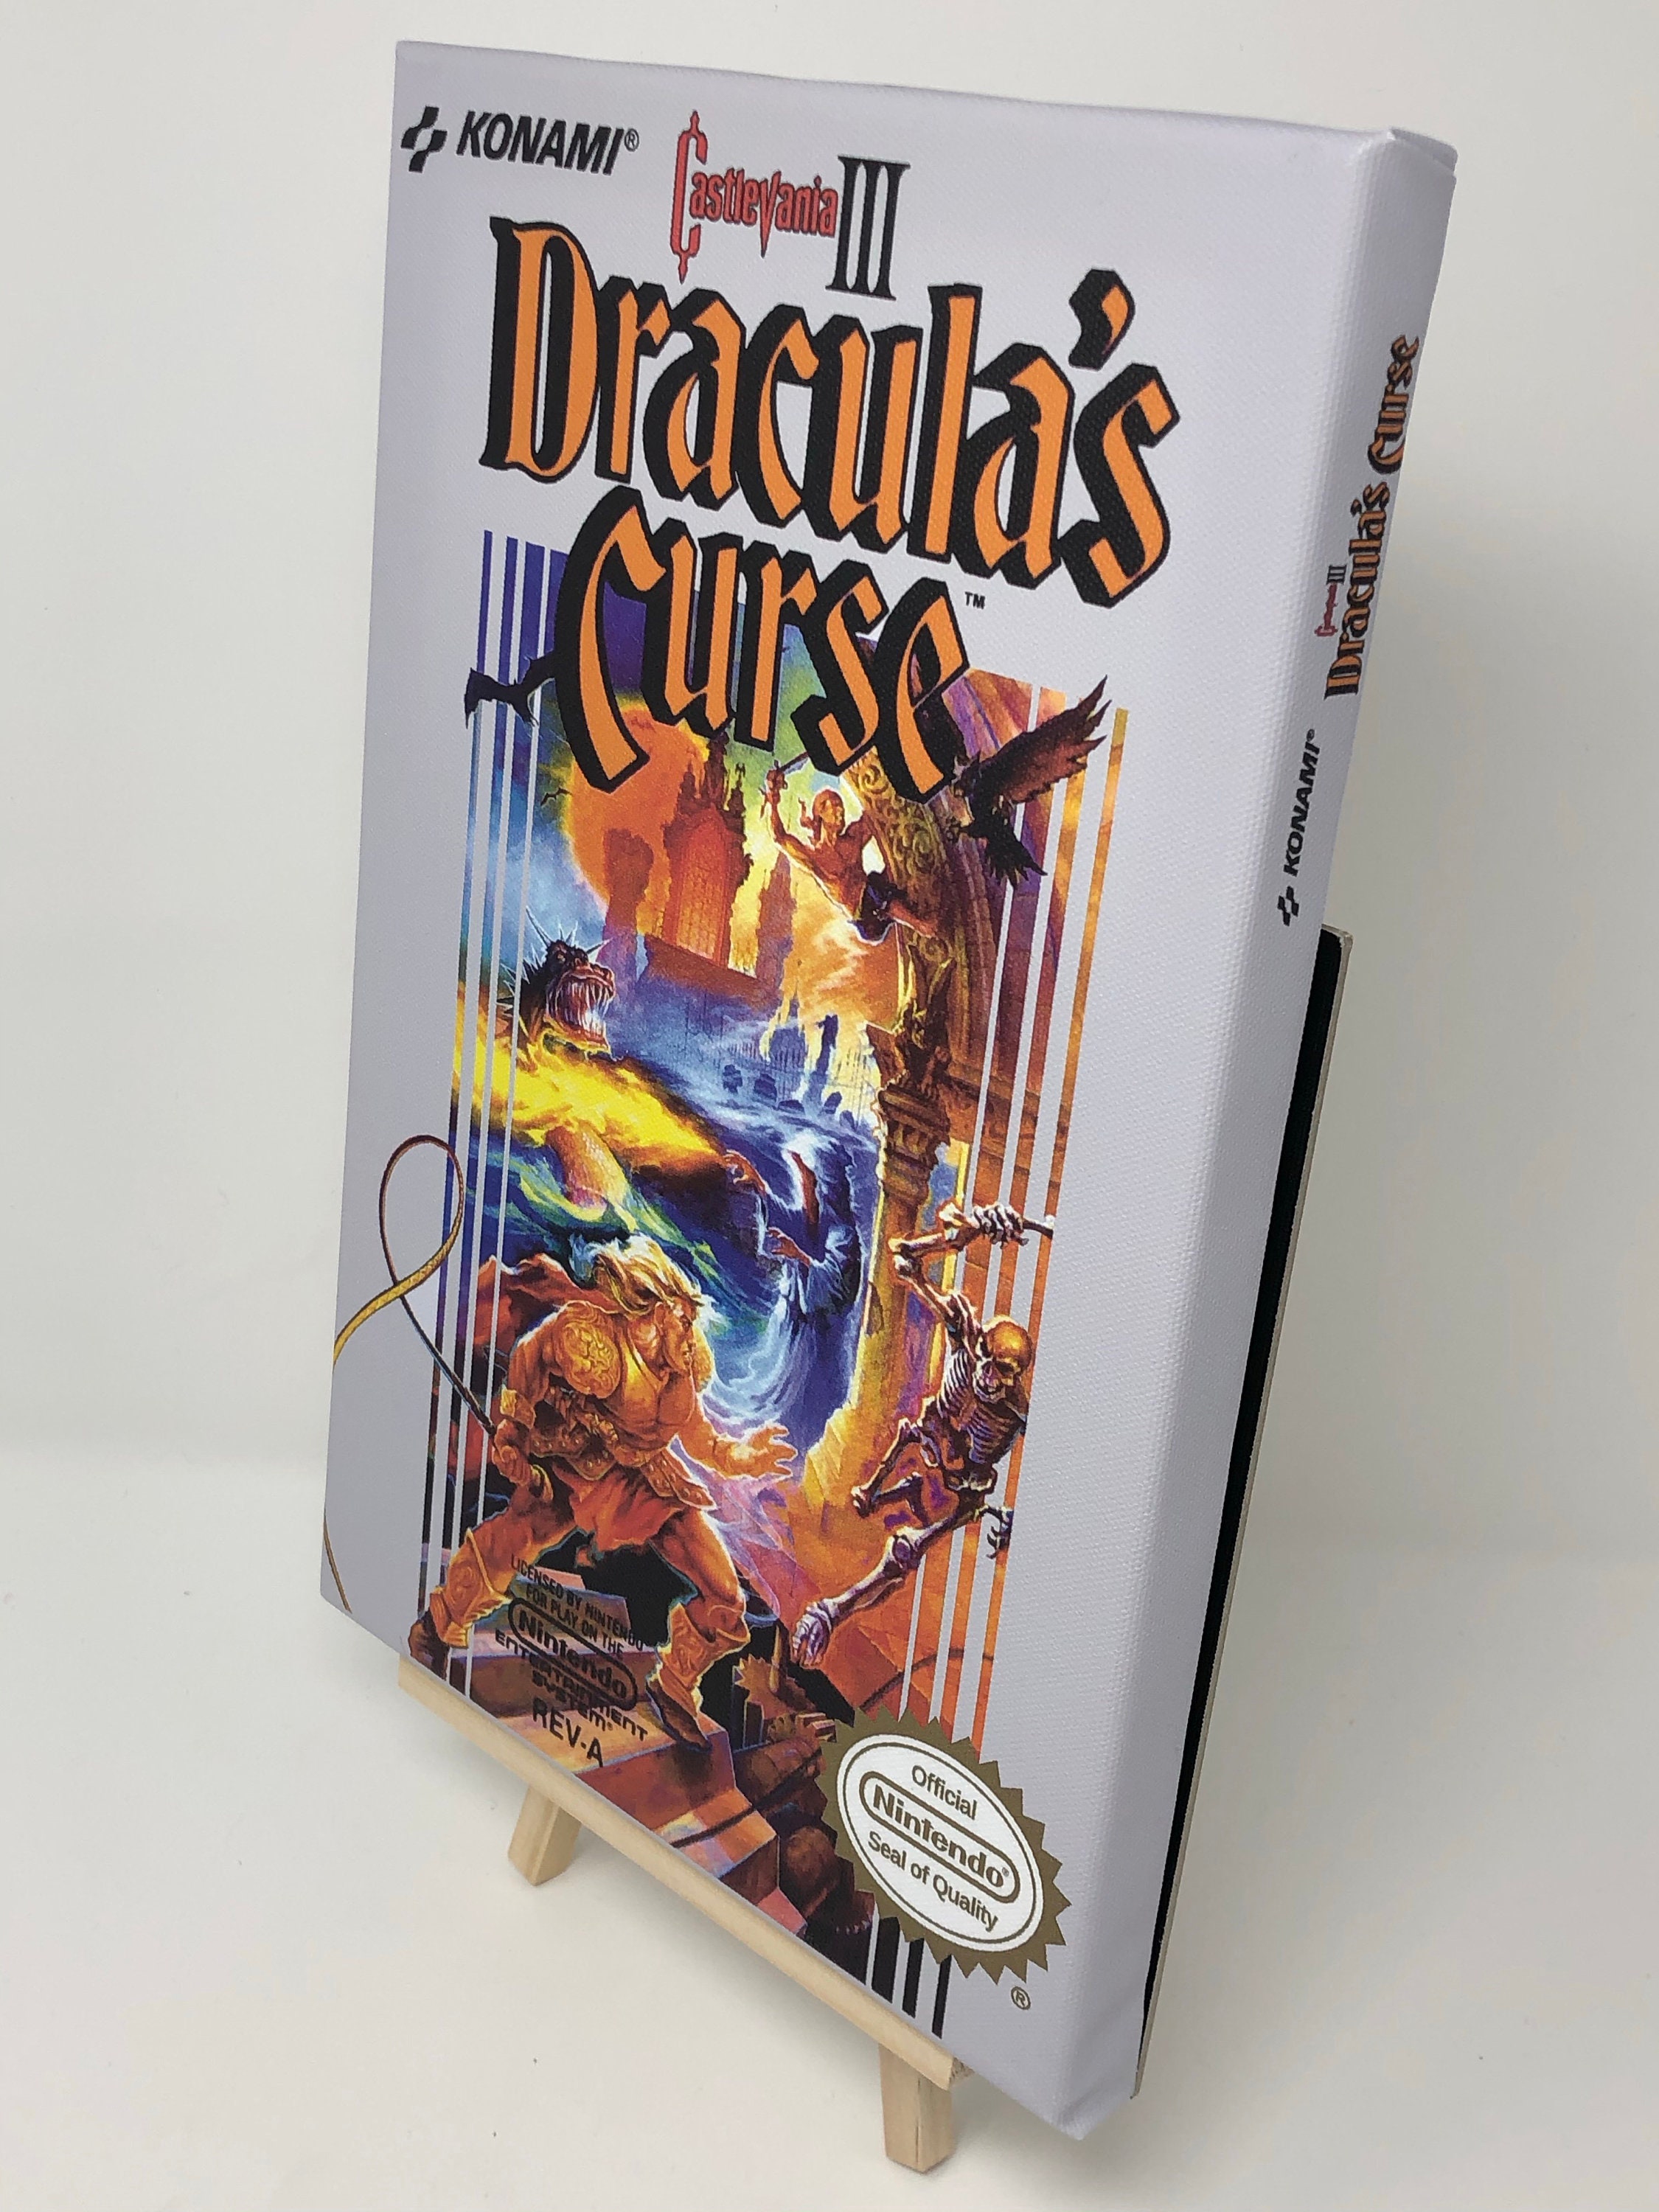 Poll: Box Art Brawl #12 - Castlevania III: Dracula's Curse